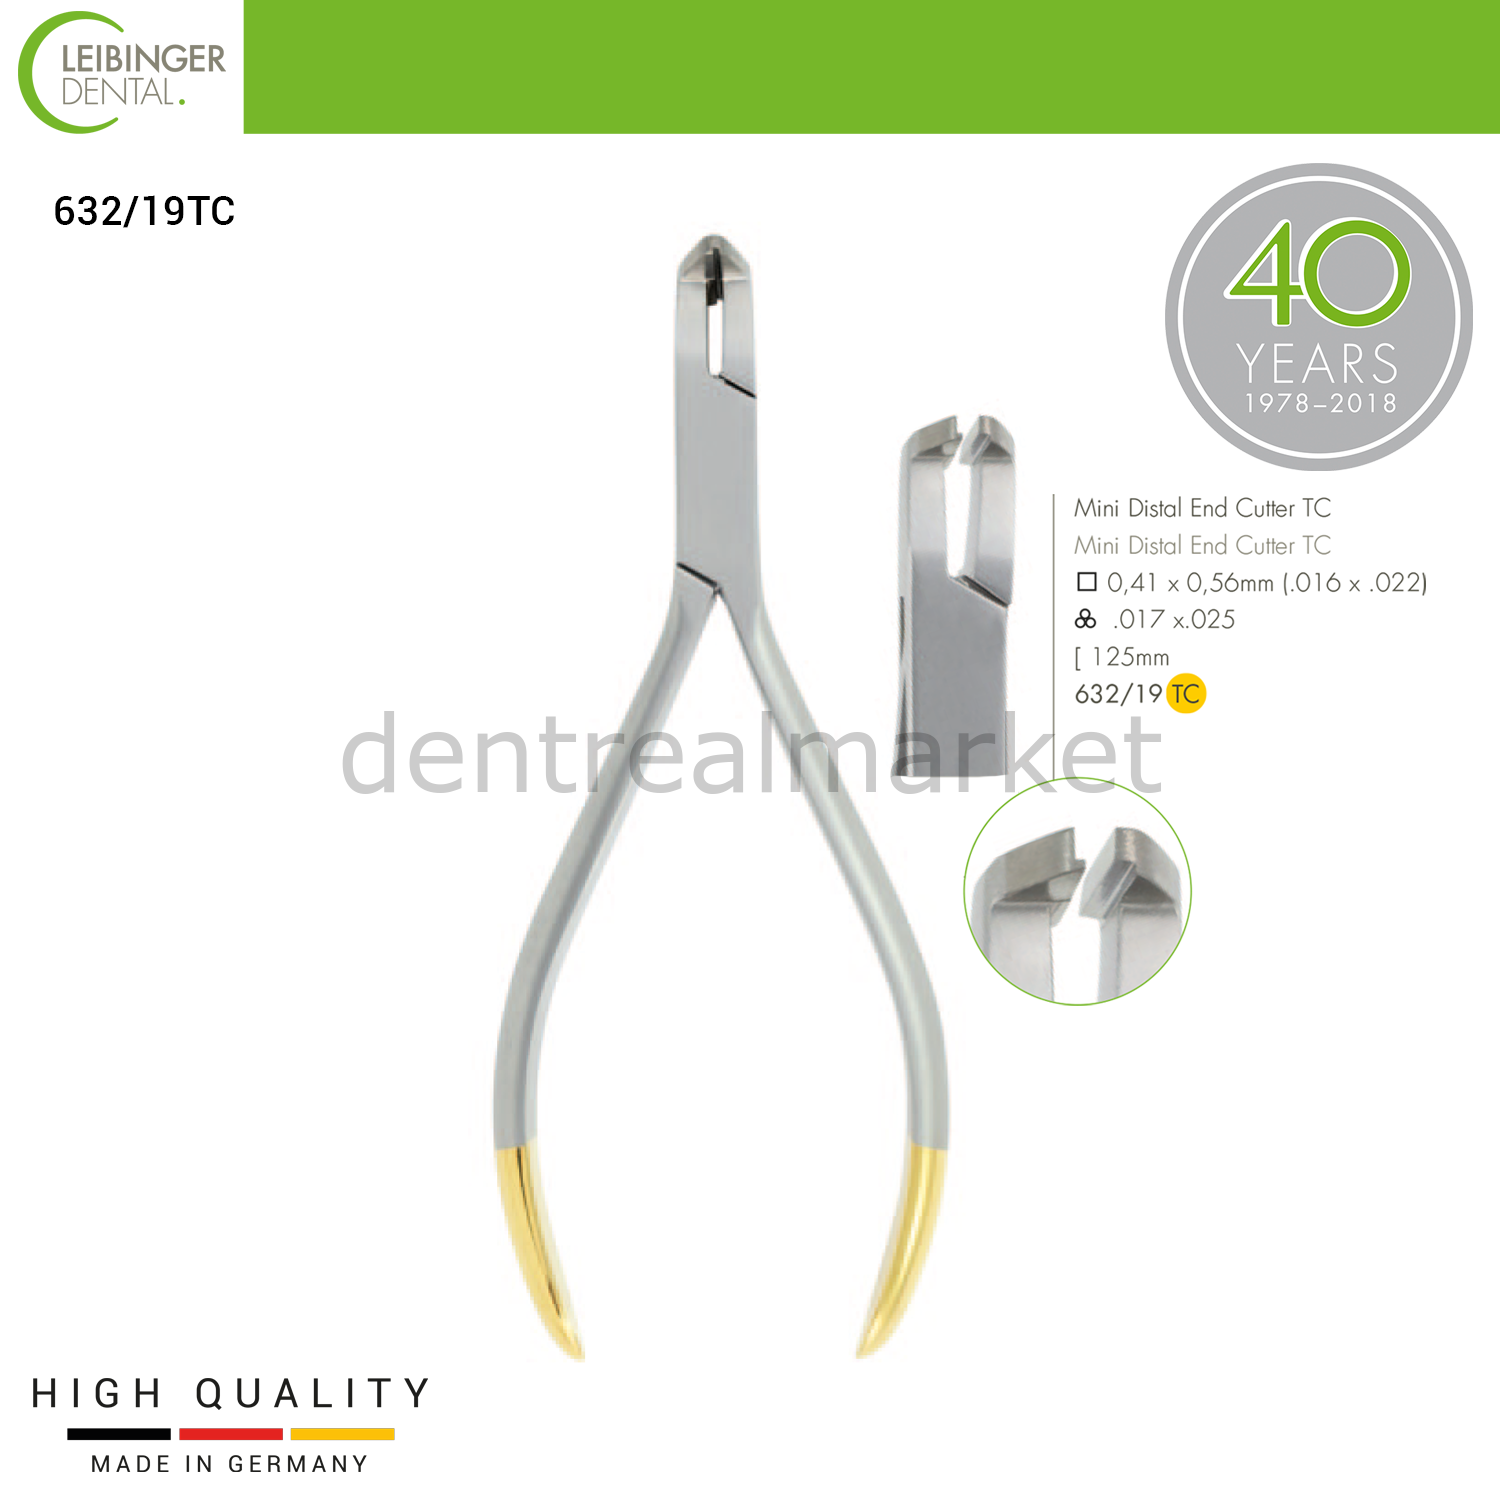 DentrealStore - Leibinger Mini Distal End Cutter Tc - Mini Distal End Cutter - 125 mm